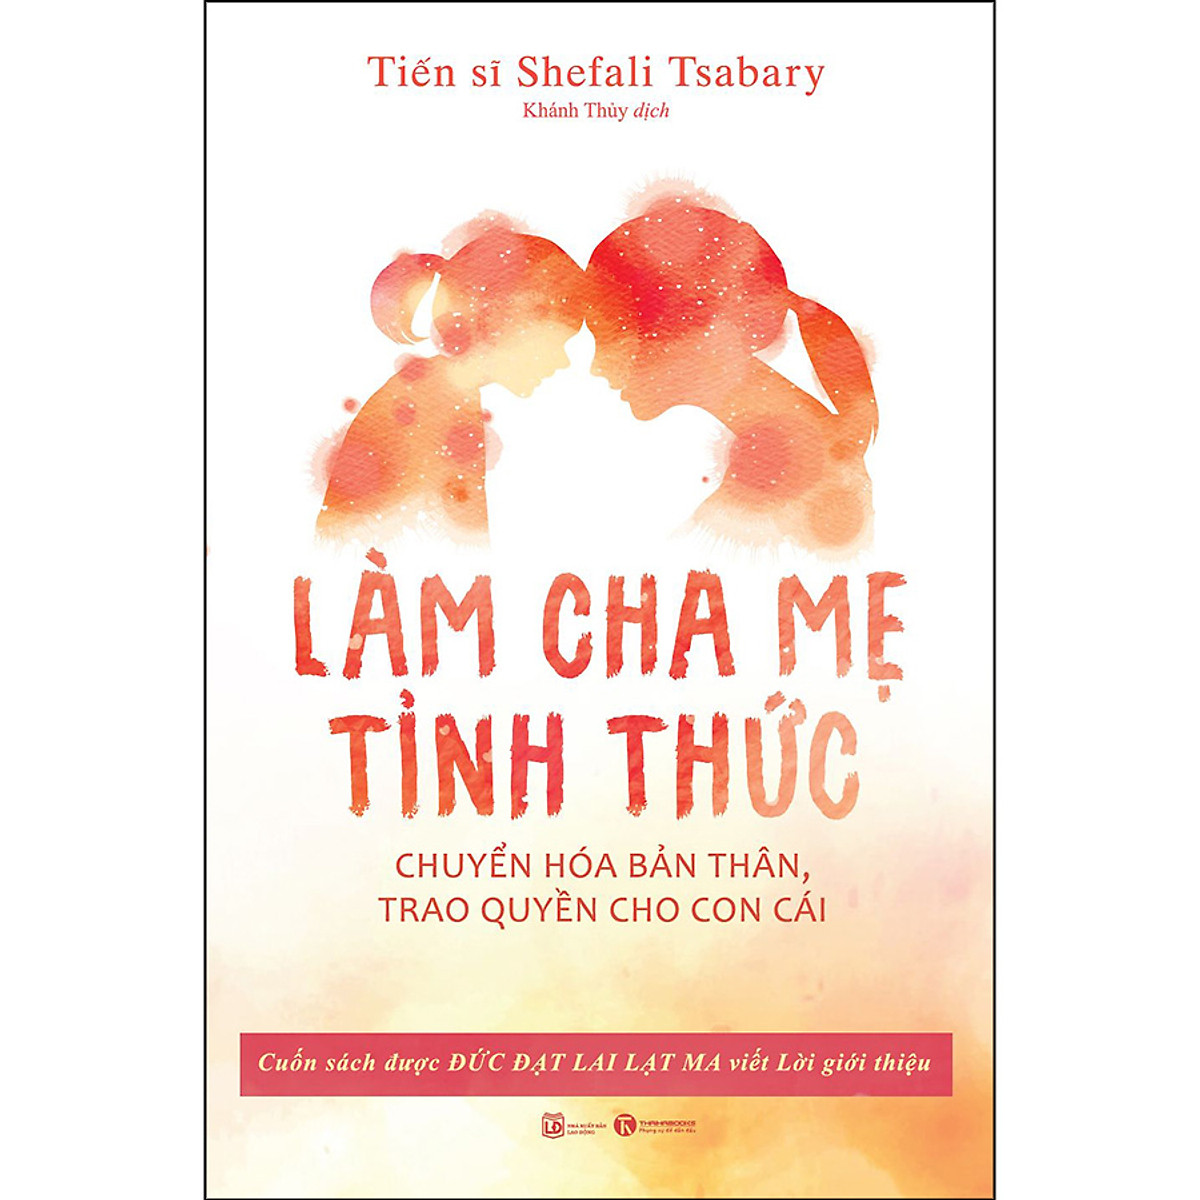 Cha me tinh thuc Phuong phap nuoi day con thanh thoi